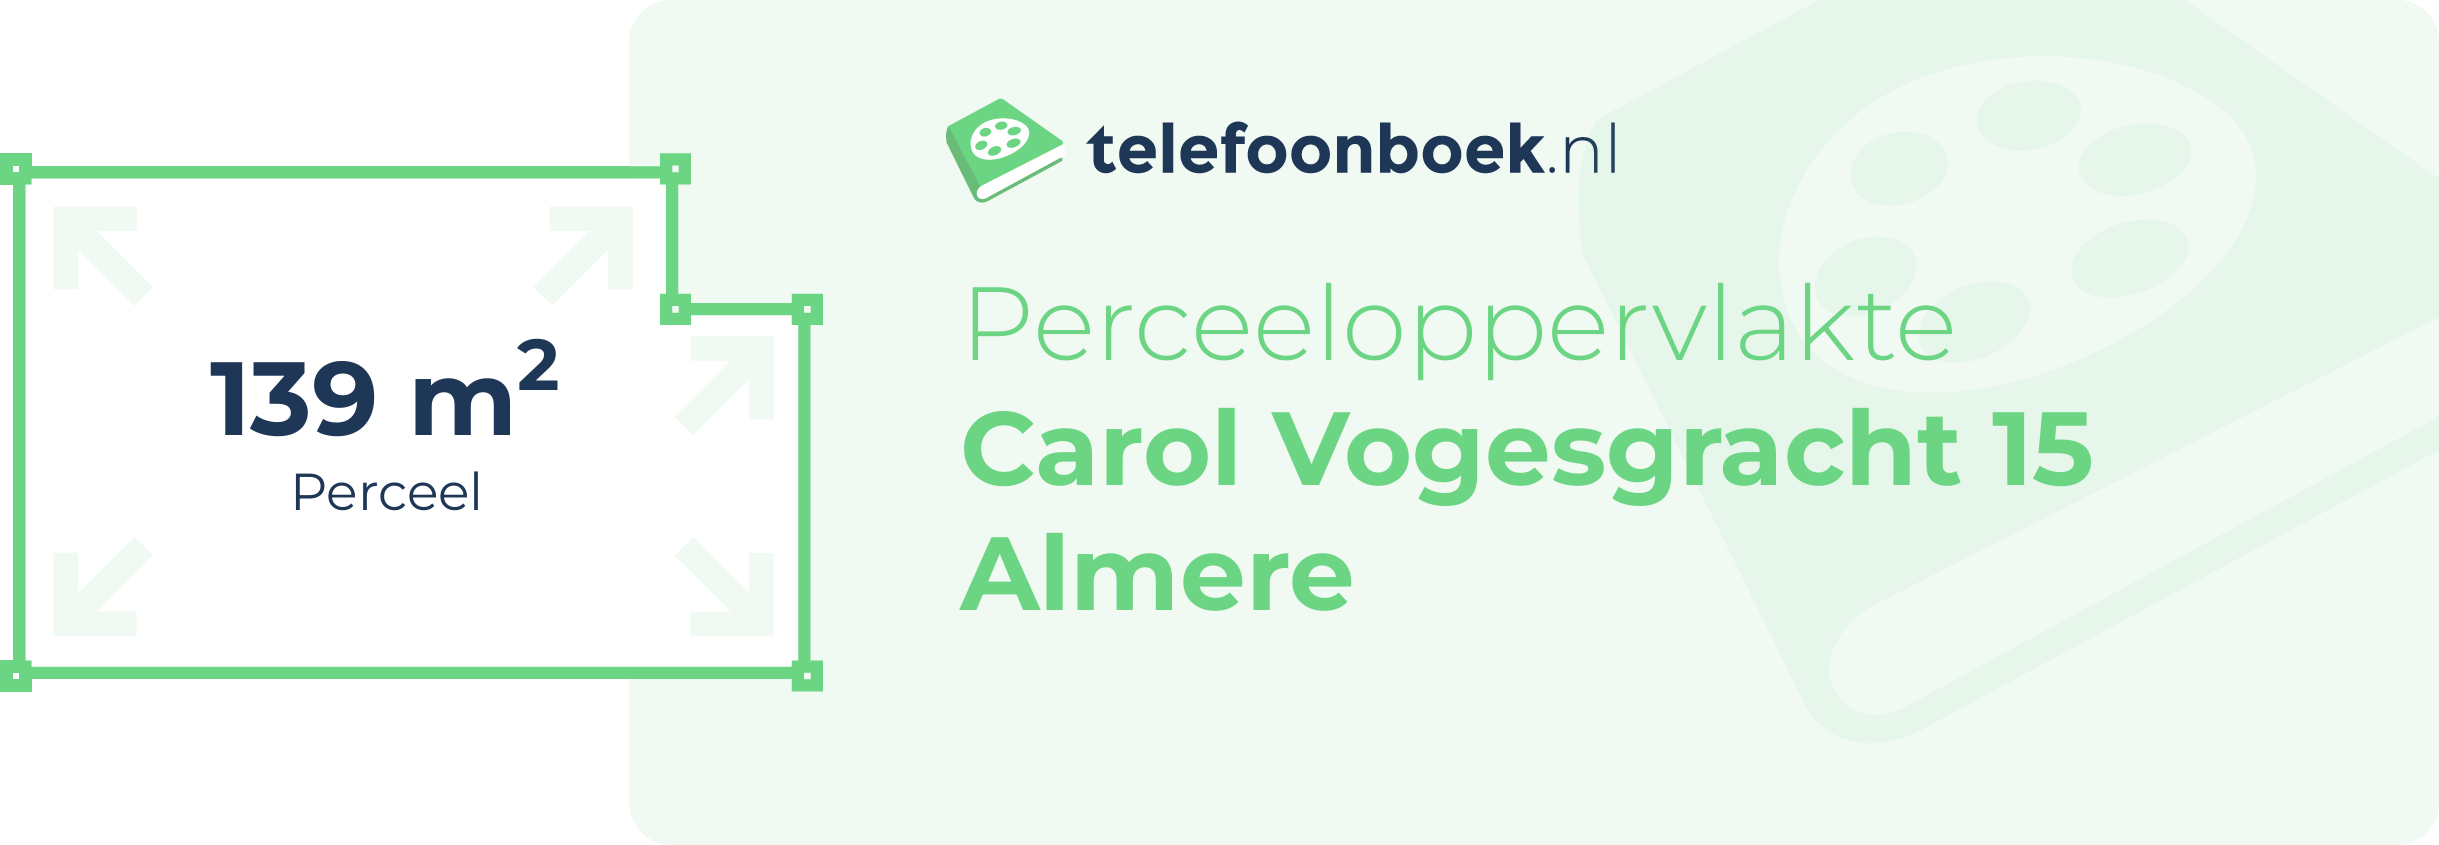 Perceeloppervlakte Carol Vogesgracht 15 Almere